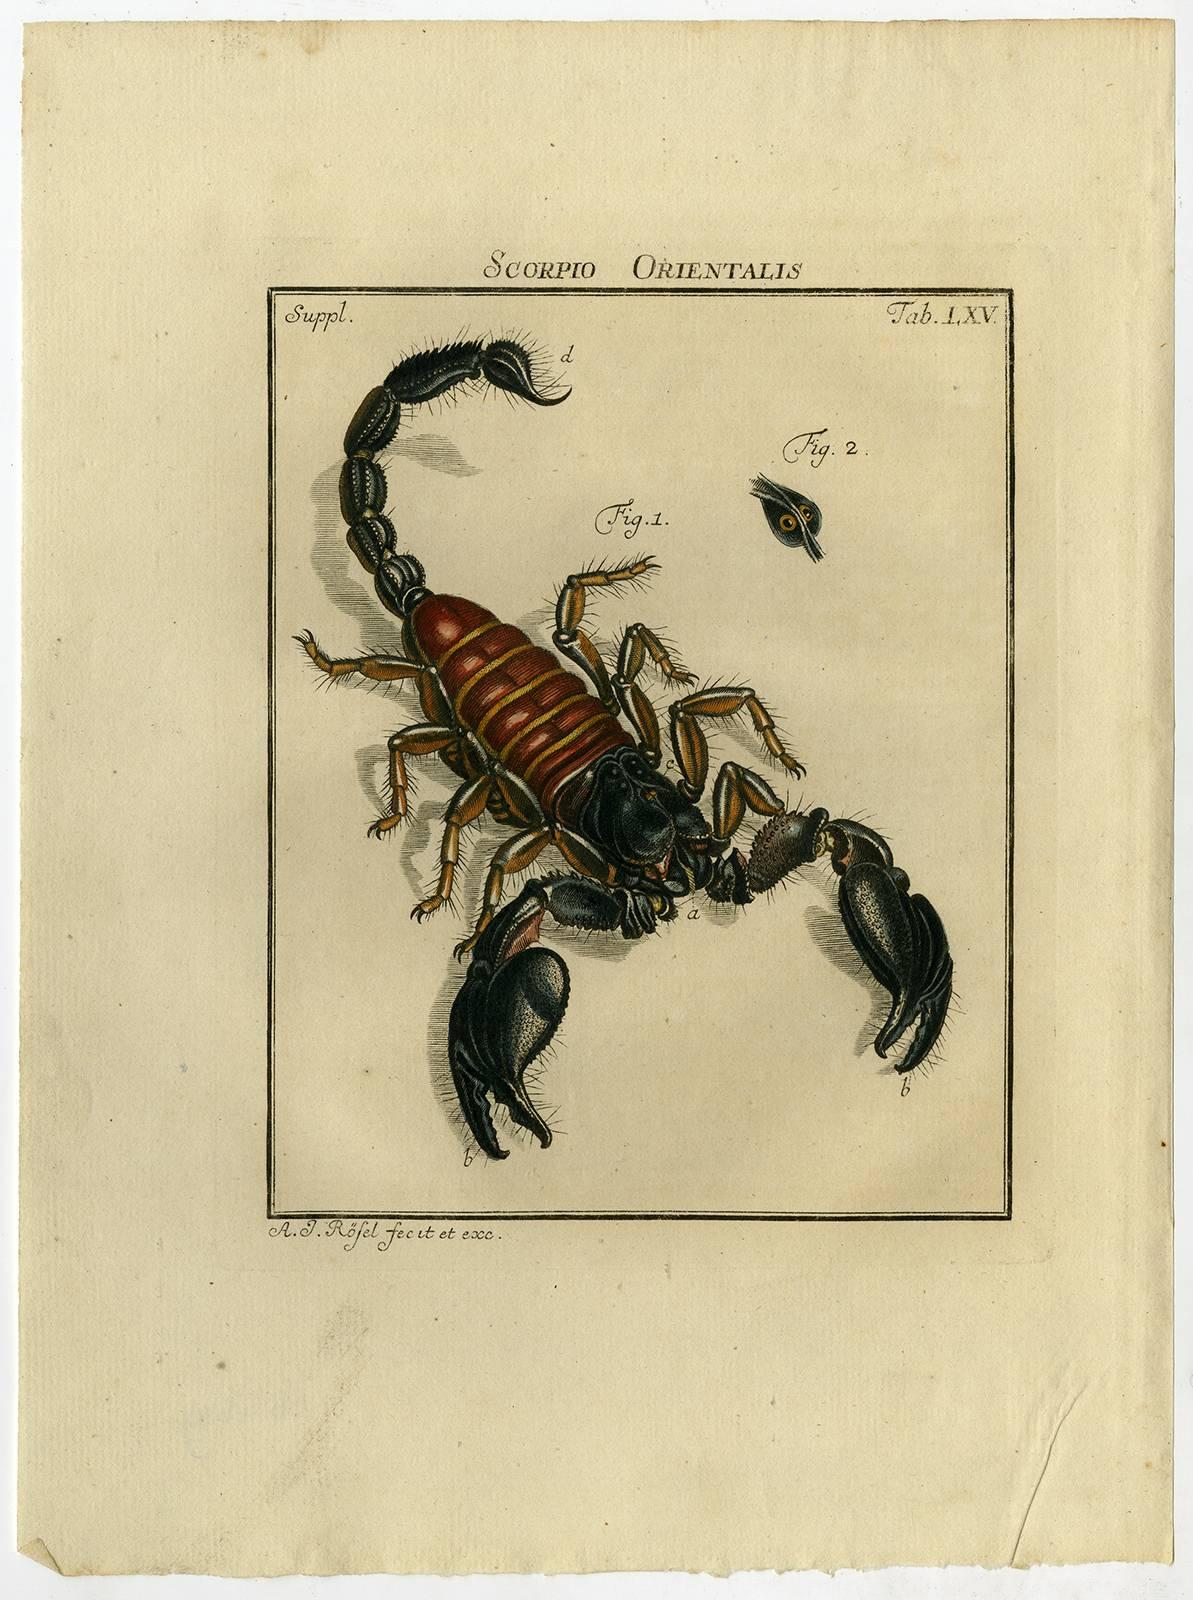 August Johann Rösel von Rosenhof Animal Print - Scorpio Orientalis. Tab. LXV.